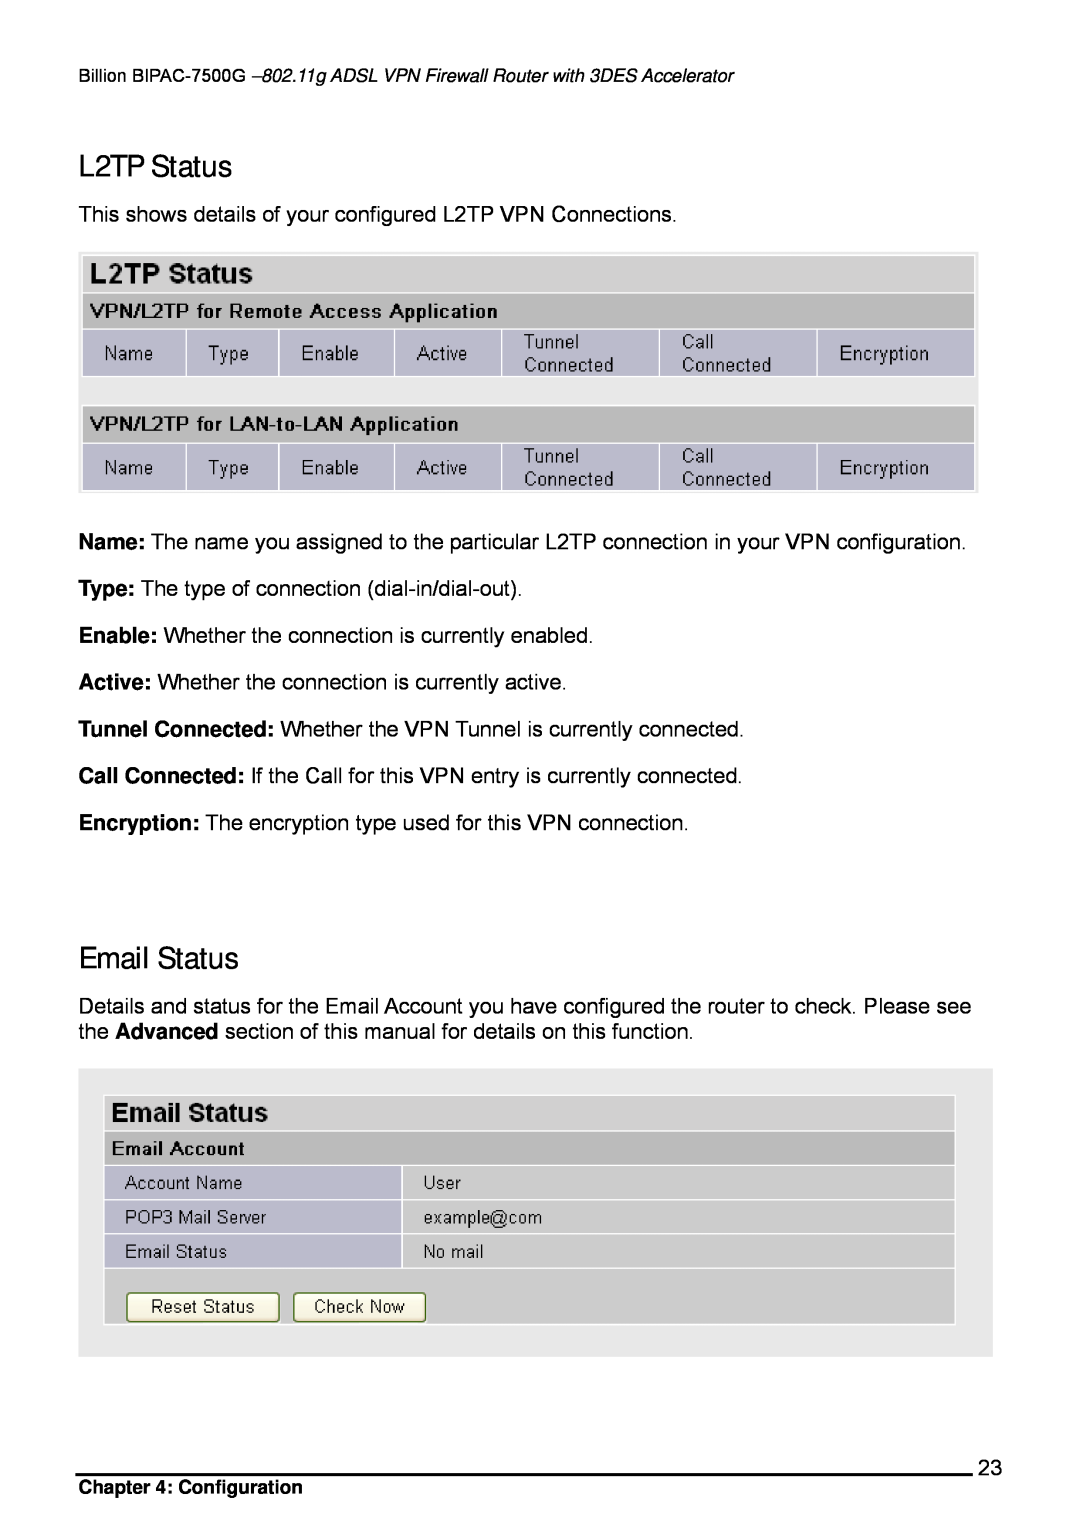 Billion Electric Company BIPAC-7500G user manual L2TP Status, Email Status 